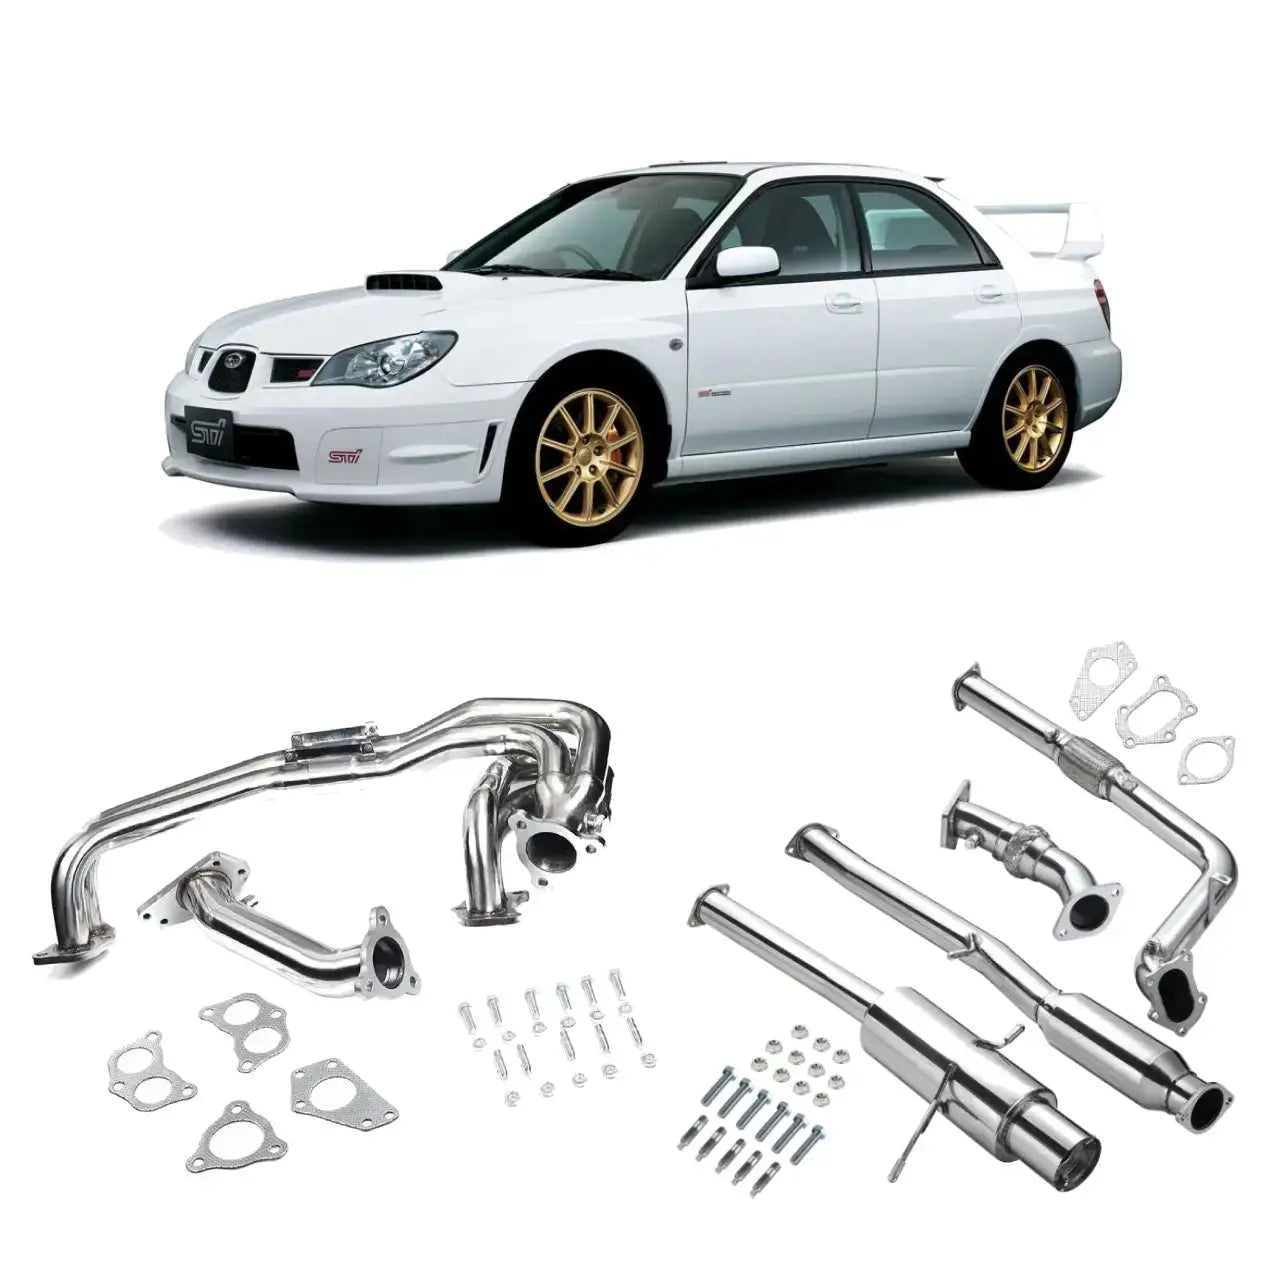 Exhaust Header/Catback w/ Downpipe Up-pipe All-In-One Kit for 2002-2006 Subaru Impreza WRX/STI Flashark